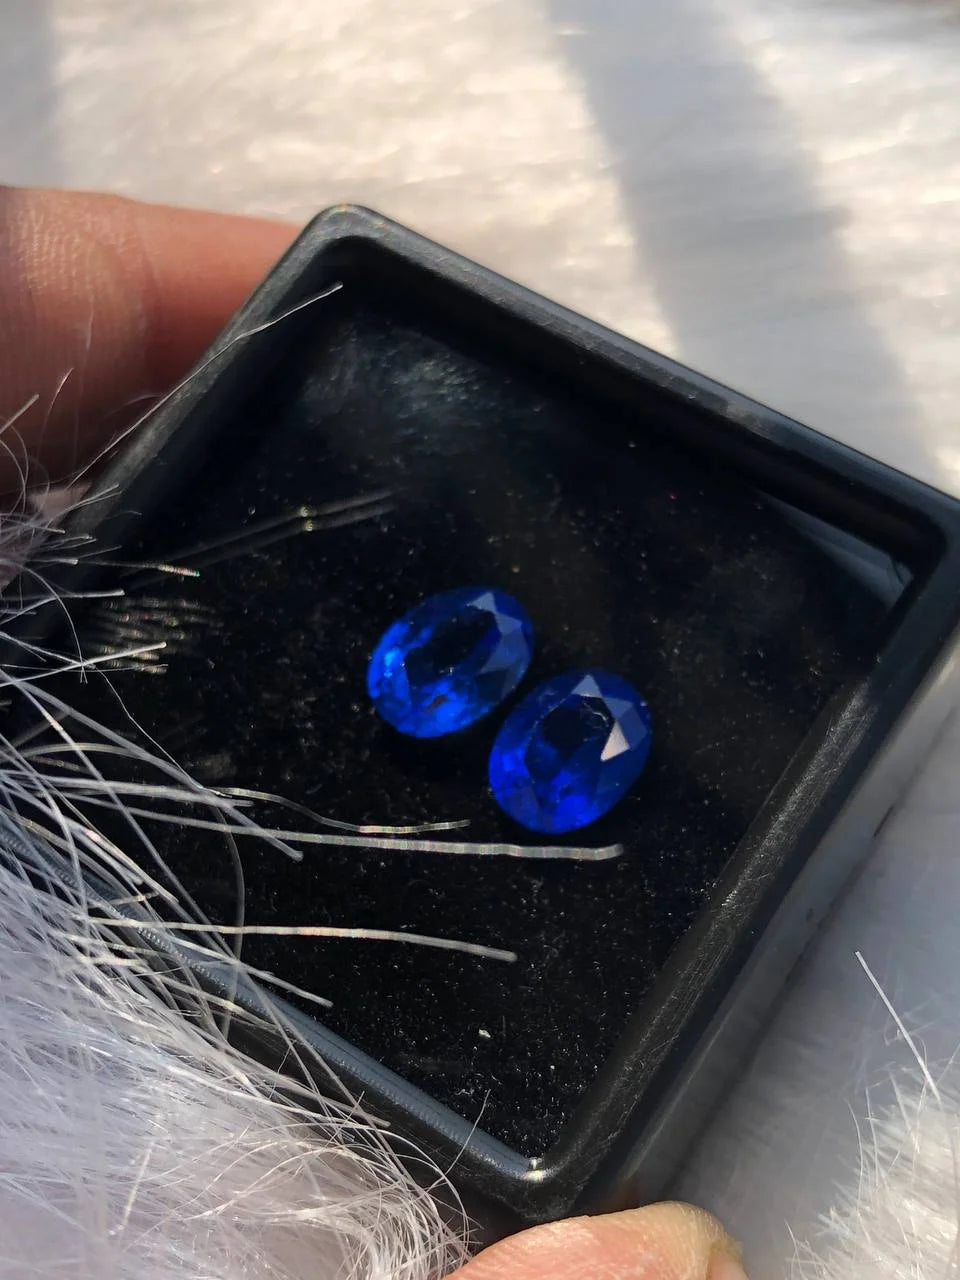 4.665 CT Oval Shape lab Created Gemstone Blue Cobalt Sapphire Loose Gemstone For Beautiful Earring